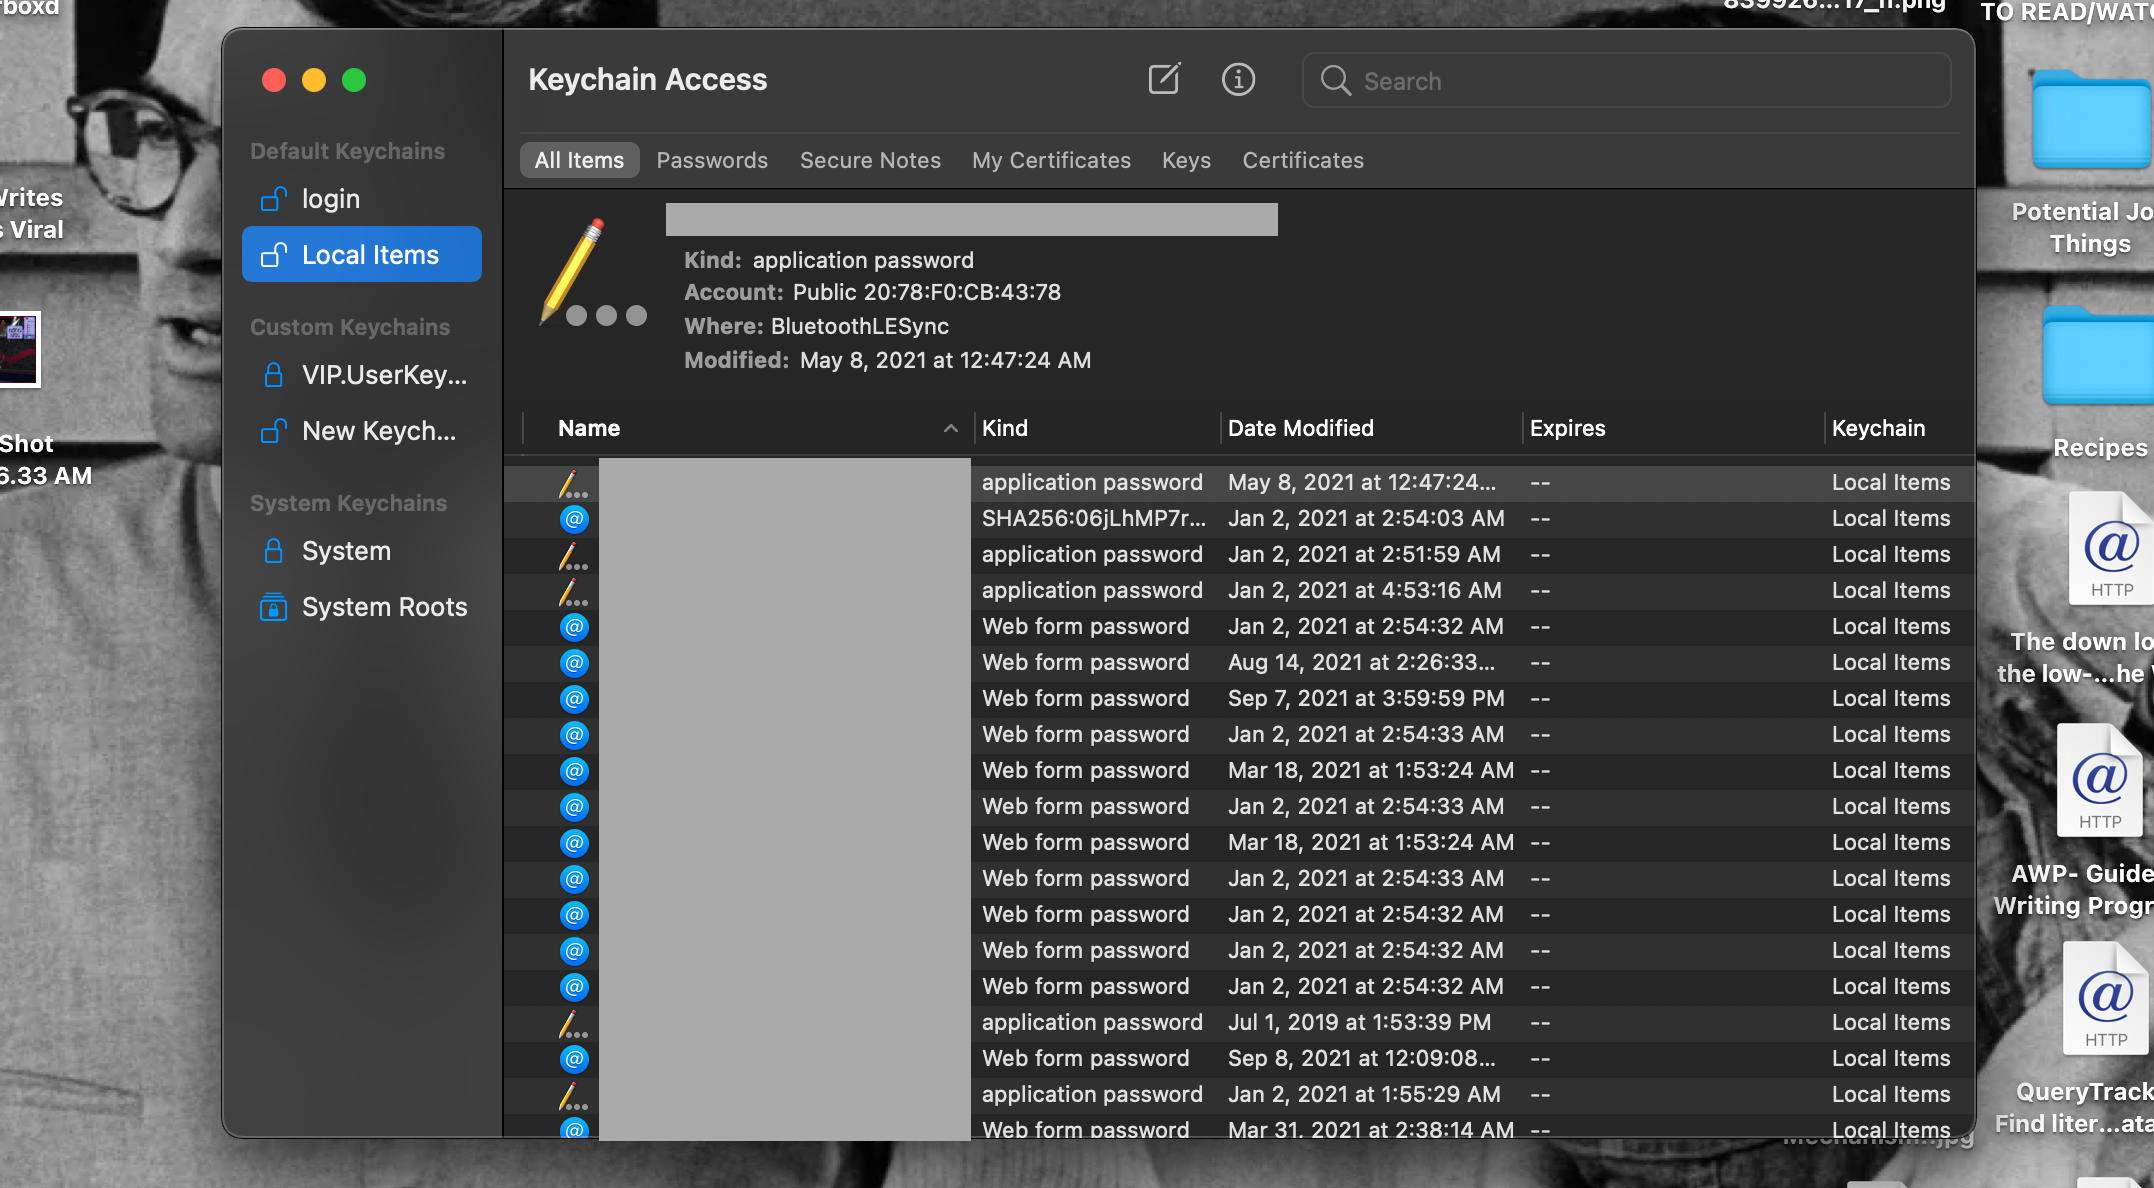 kostik vakum cinnet  What Is the Keychain Password on a Mac?